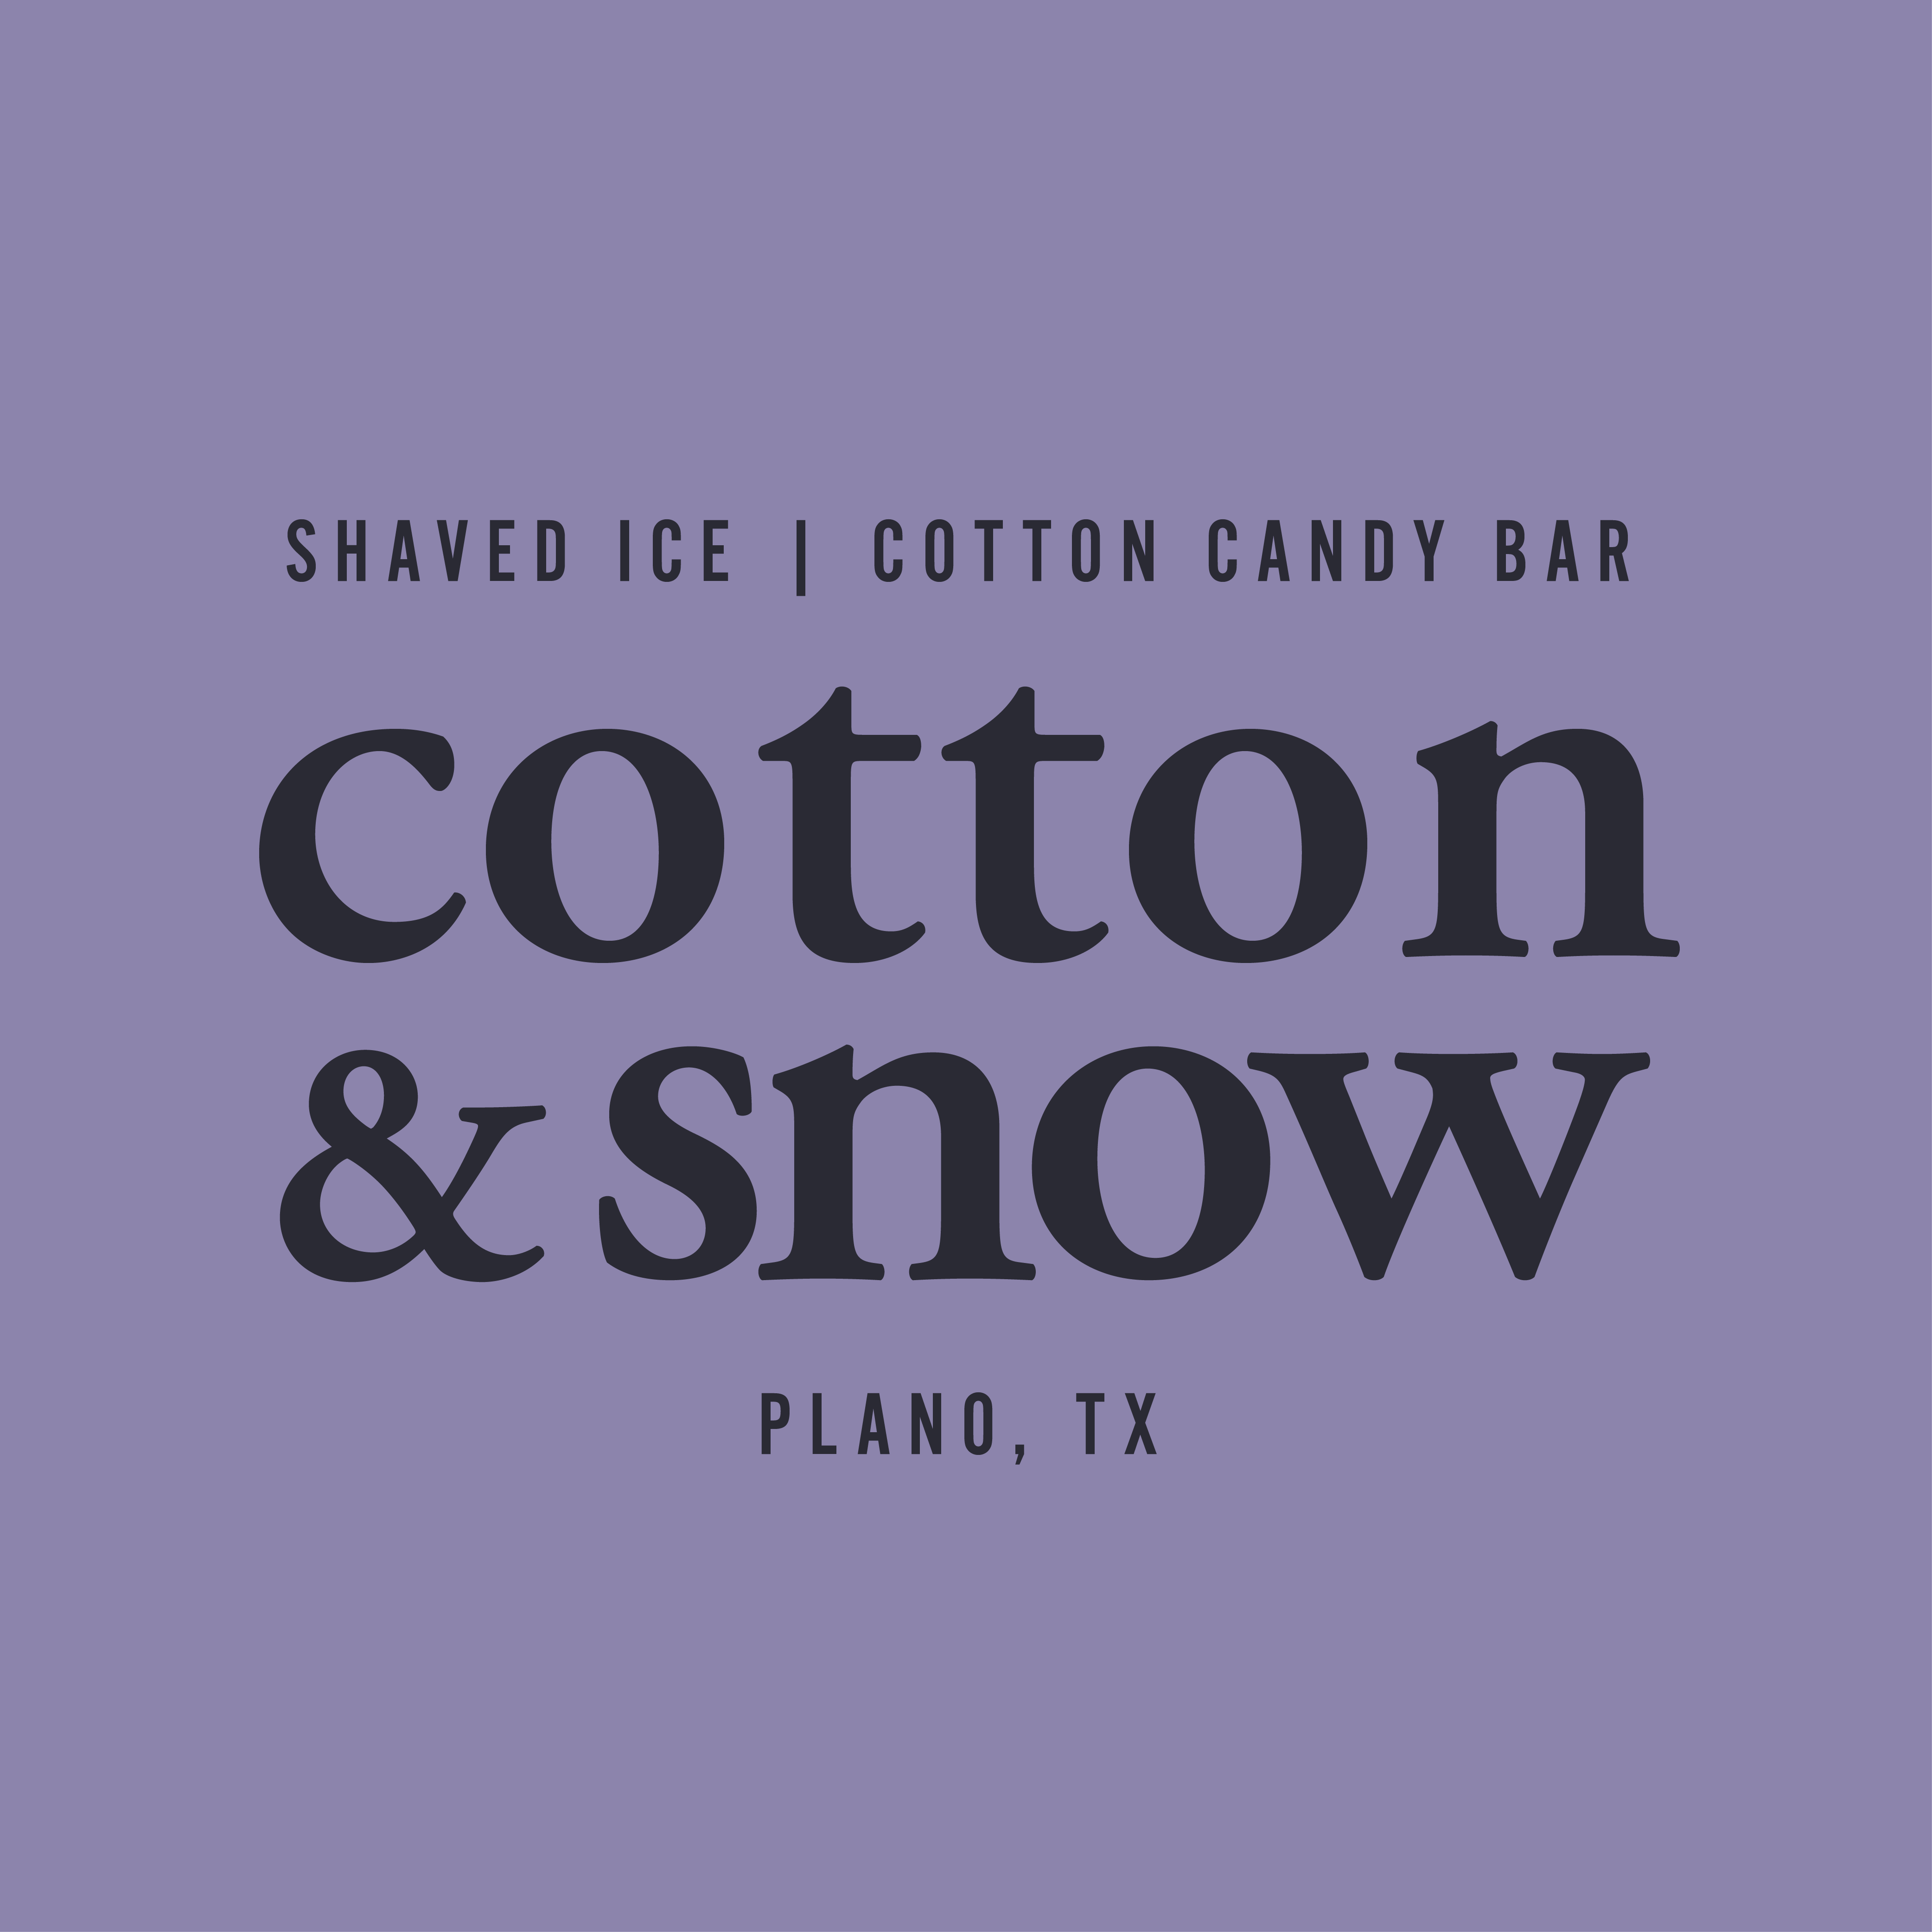 Cotton & Snow - vendor logo